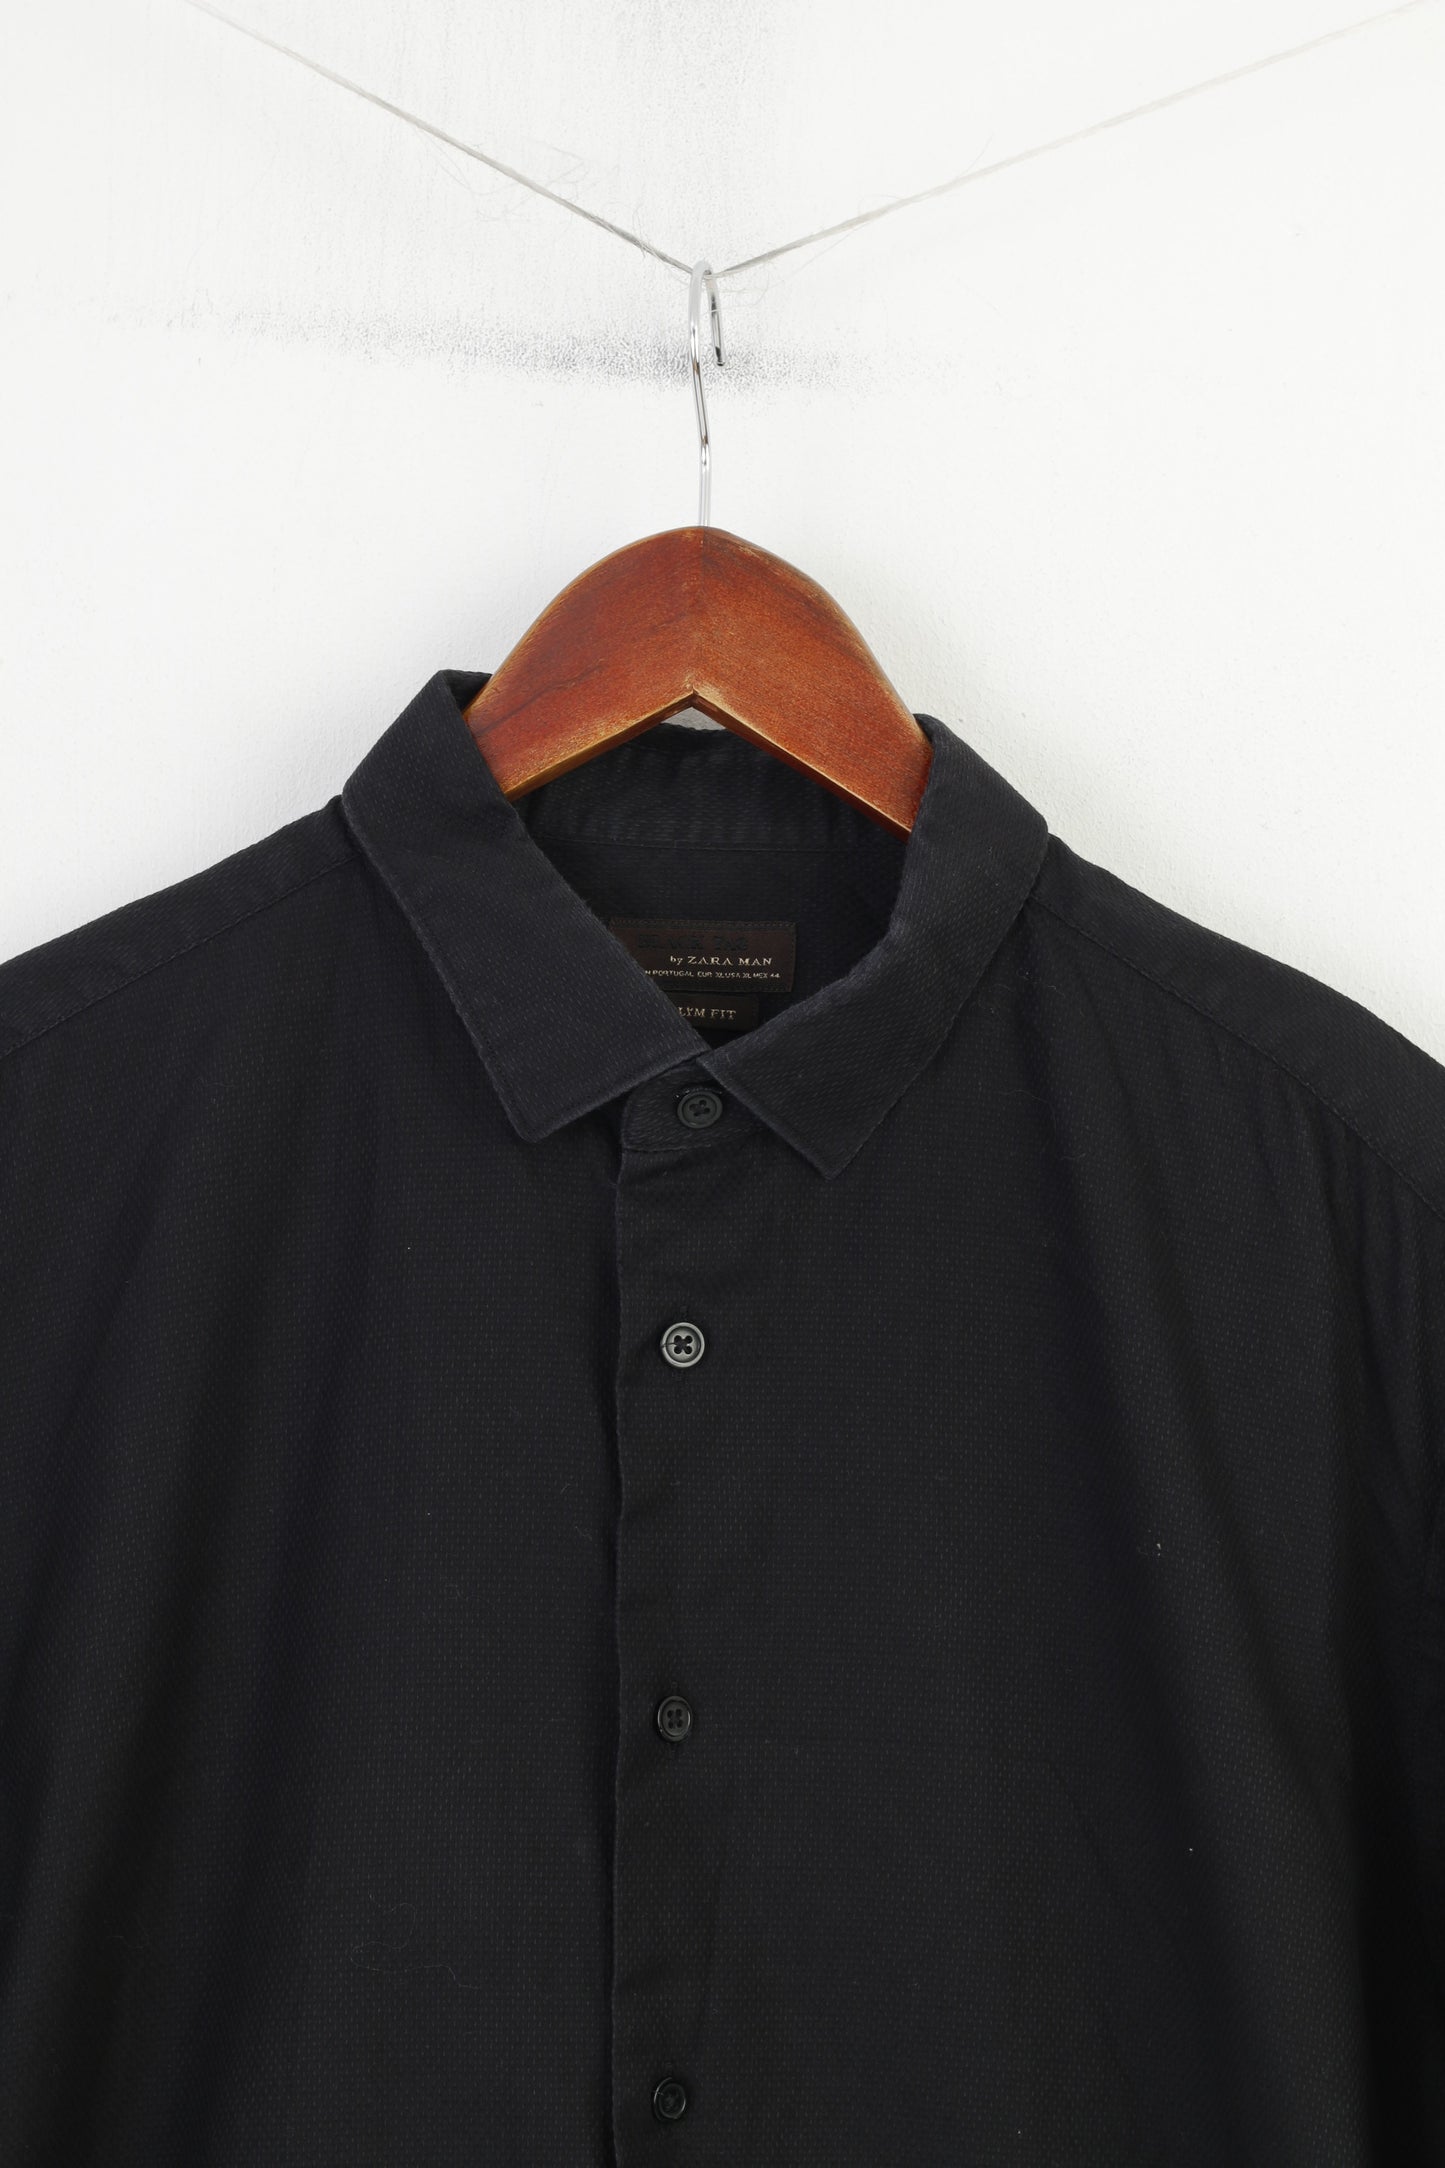 Zara  Men XL Casual Shirt Black Cotton Slim Fit Long Sleeve Top